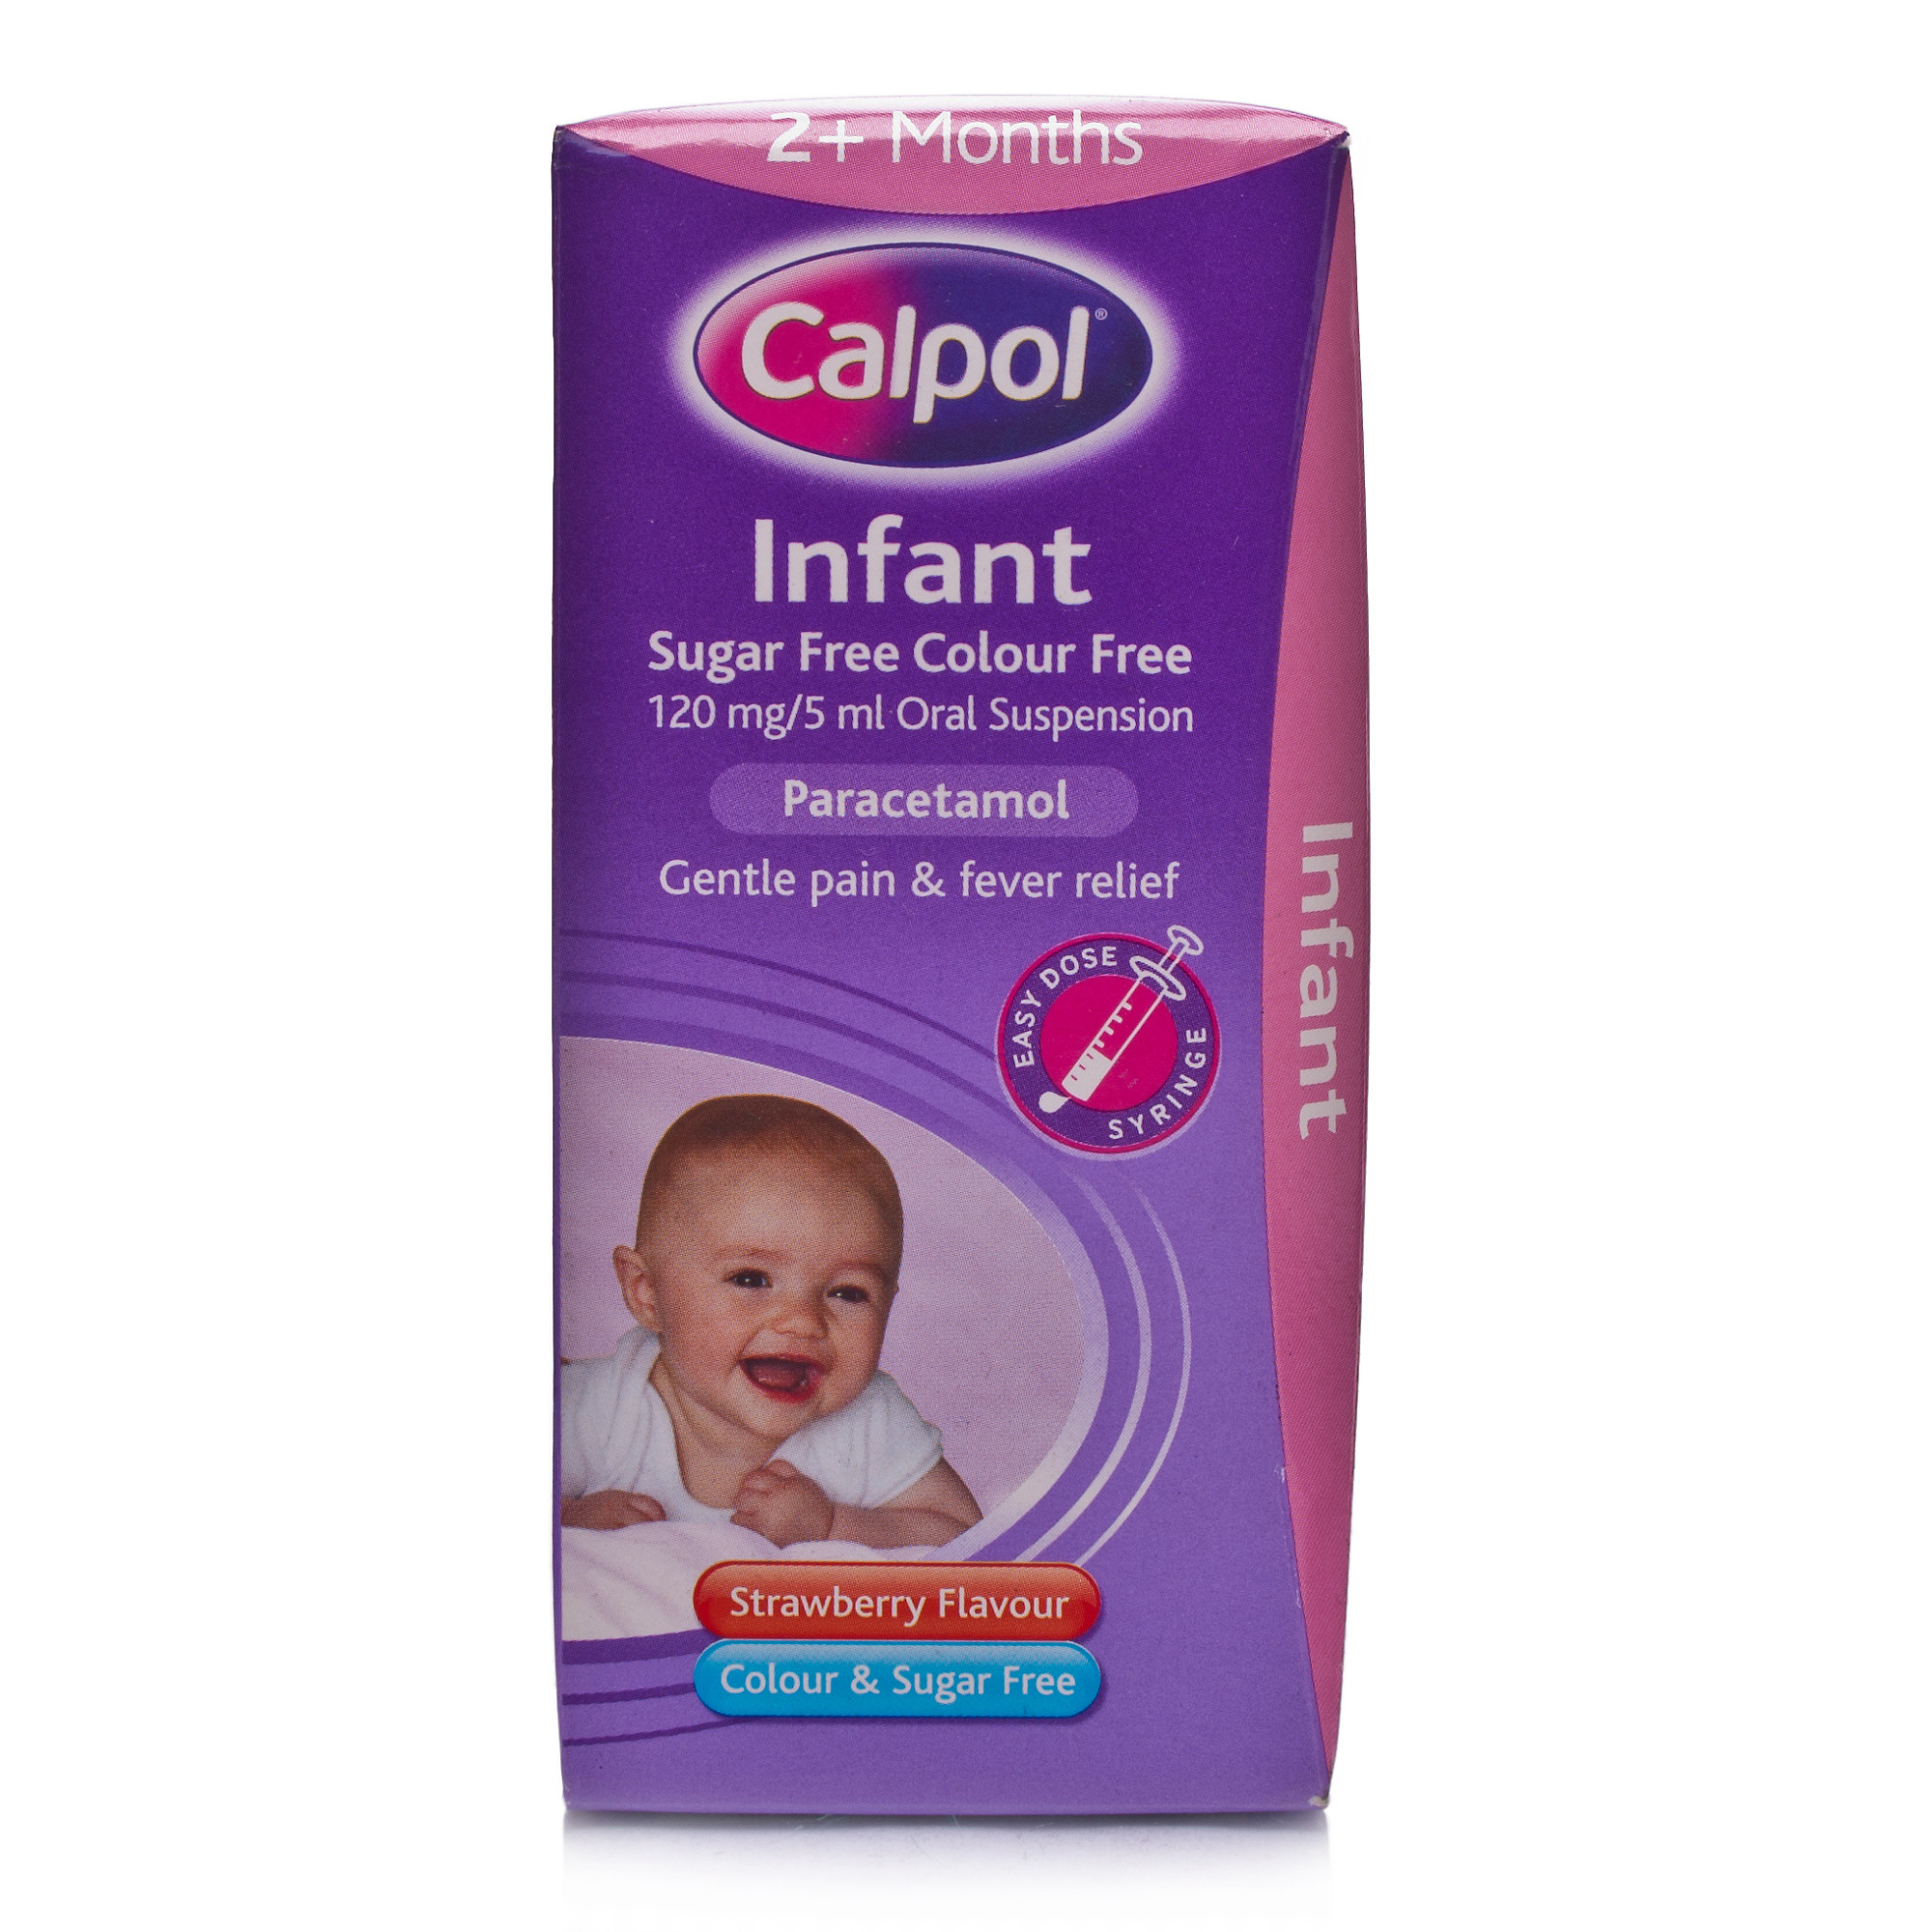 Calpol Infant Suspension Sugar Free 2+ Months - 100ml